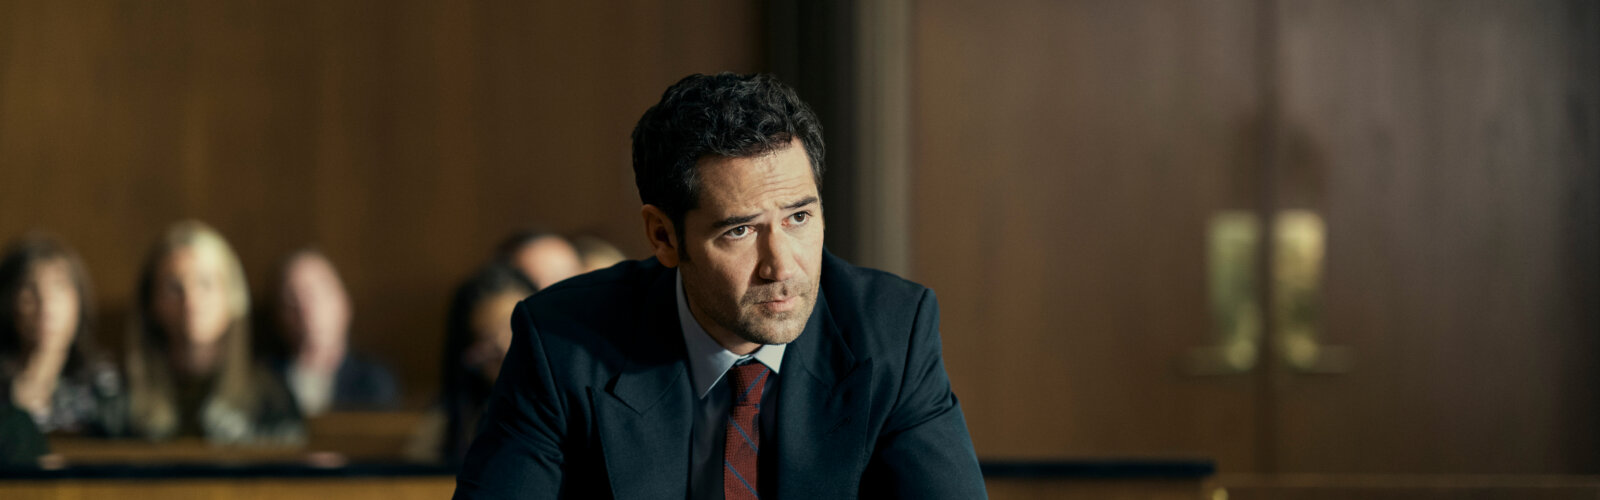 Manuel Garcia-Rulfo als Anwalt Mickey Haller in The Lincoln Lawyer, Staffel 1.